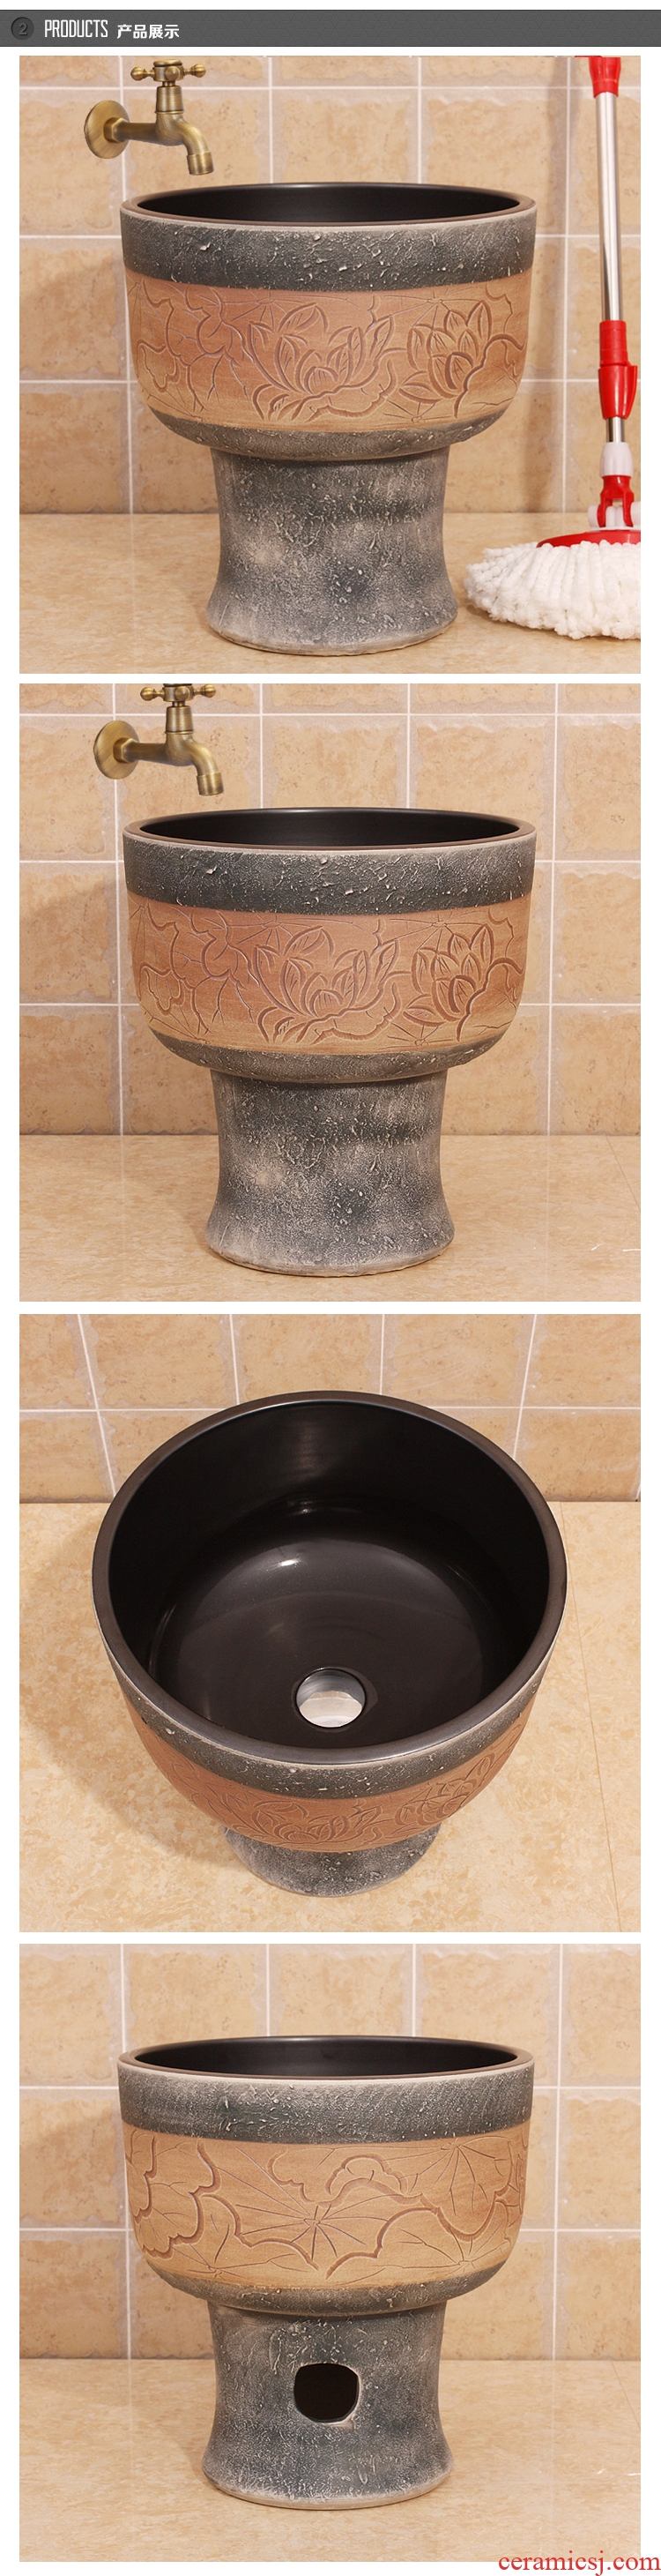 Jingdezhen ceramic art mop pool water - saving conjoined mop pool pool sewage pool under the mop bucket